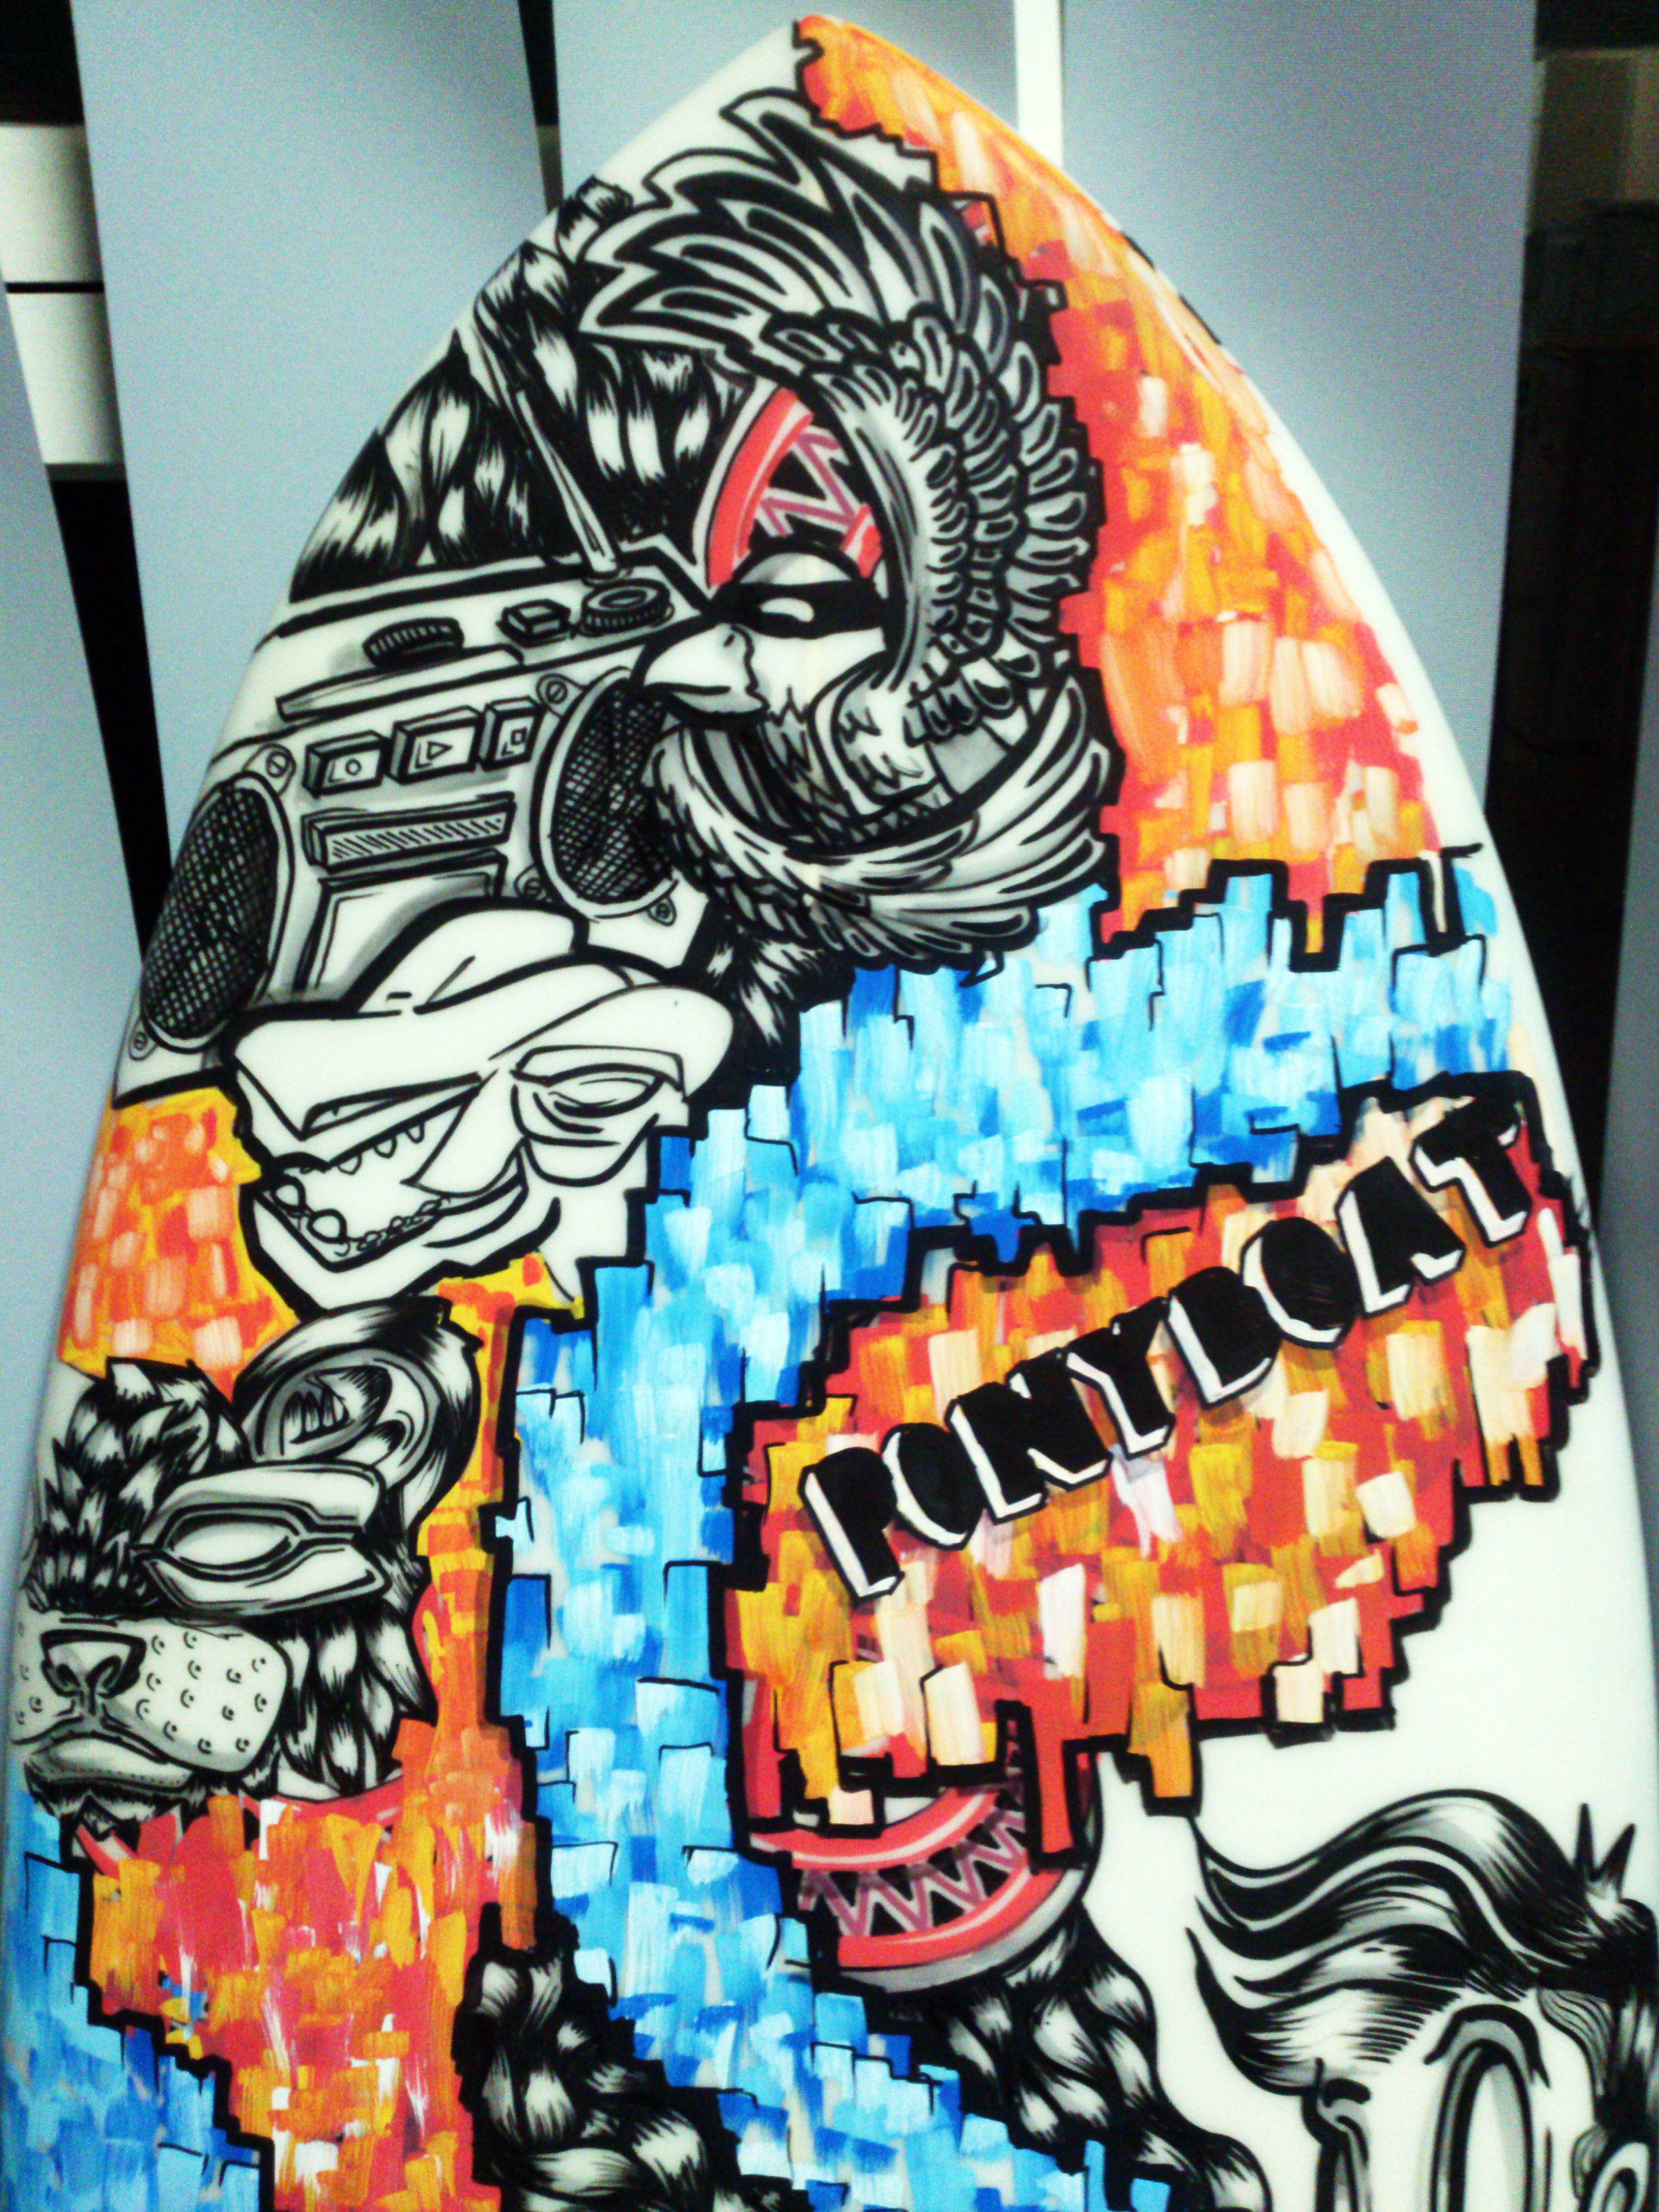 nose-closeup-close-up-painted-surfboard-handmade-hand-painted-sydney-painter-sam-shennan-ud3-illustrator.jpg